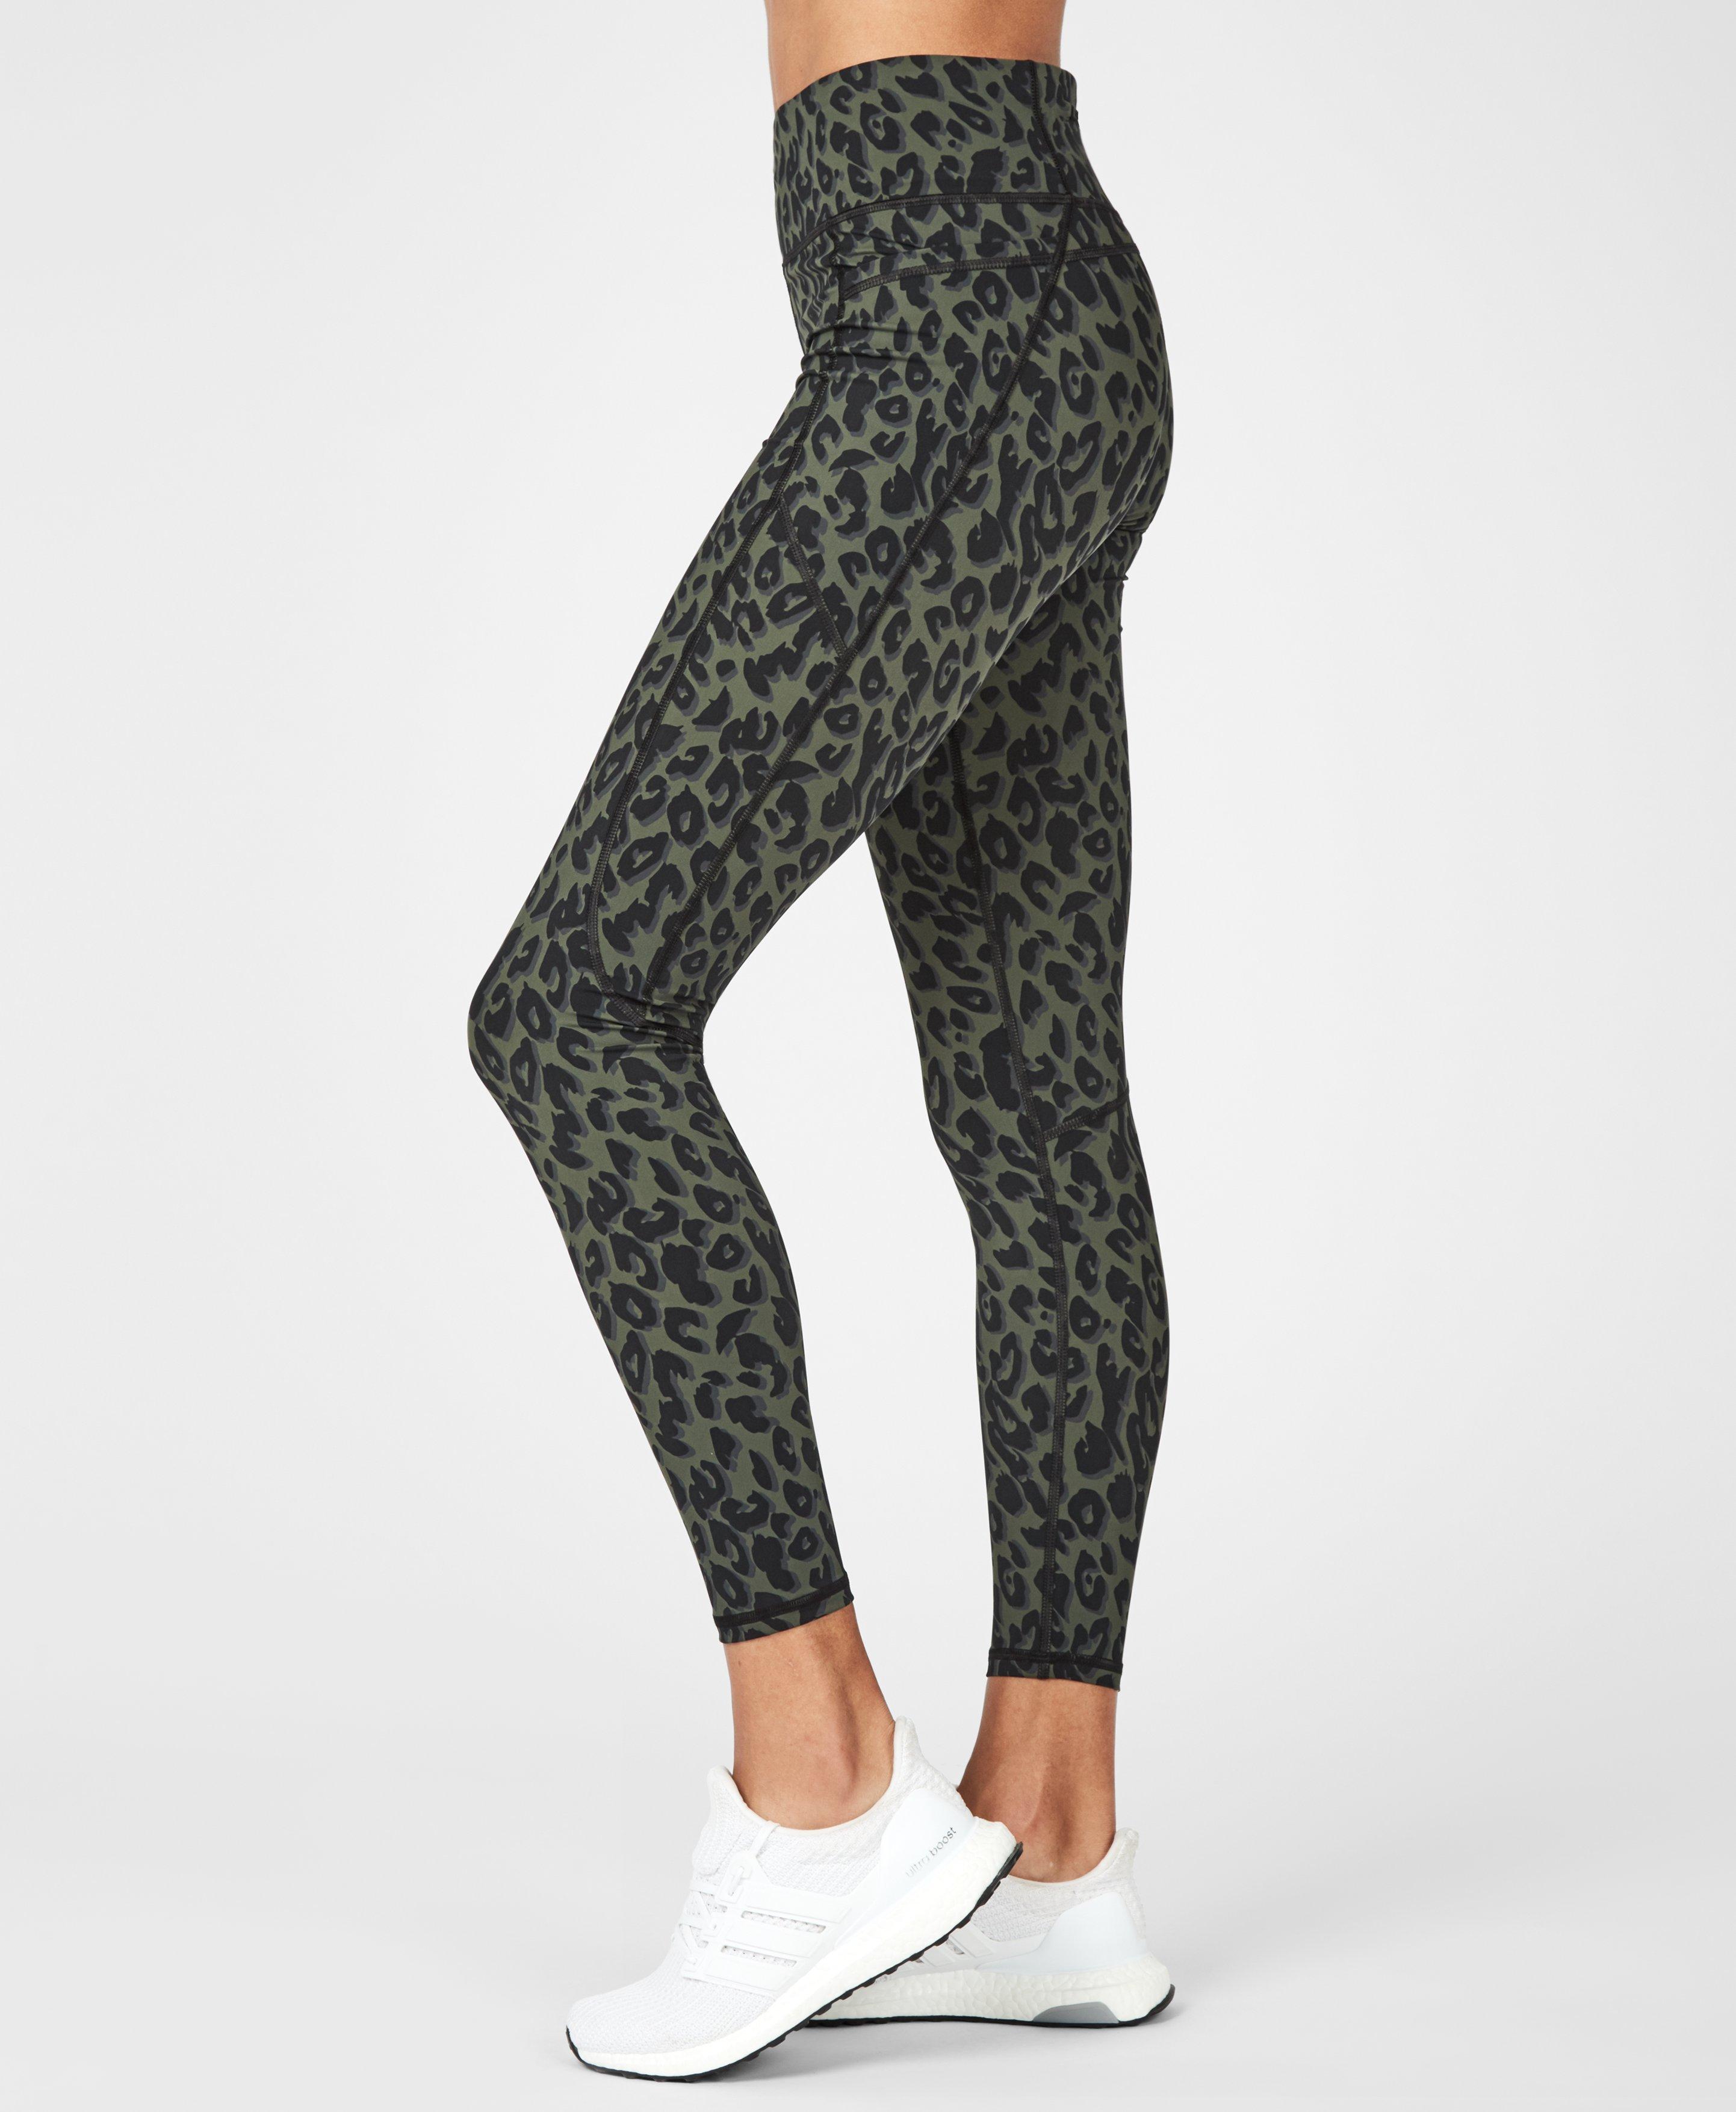 leopard print athletic leggings